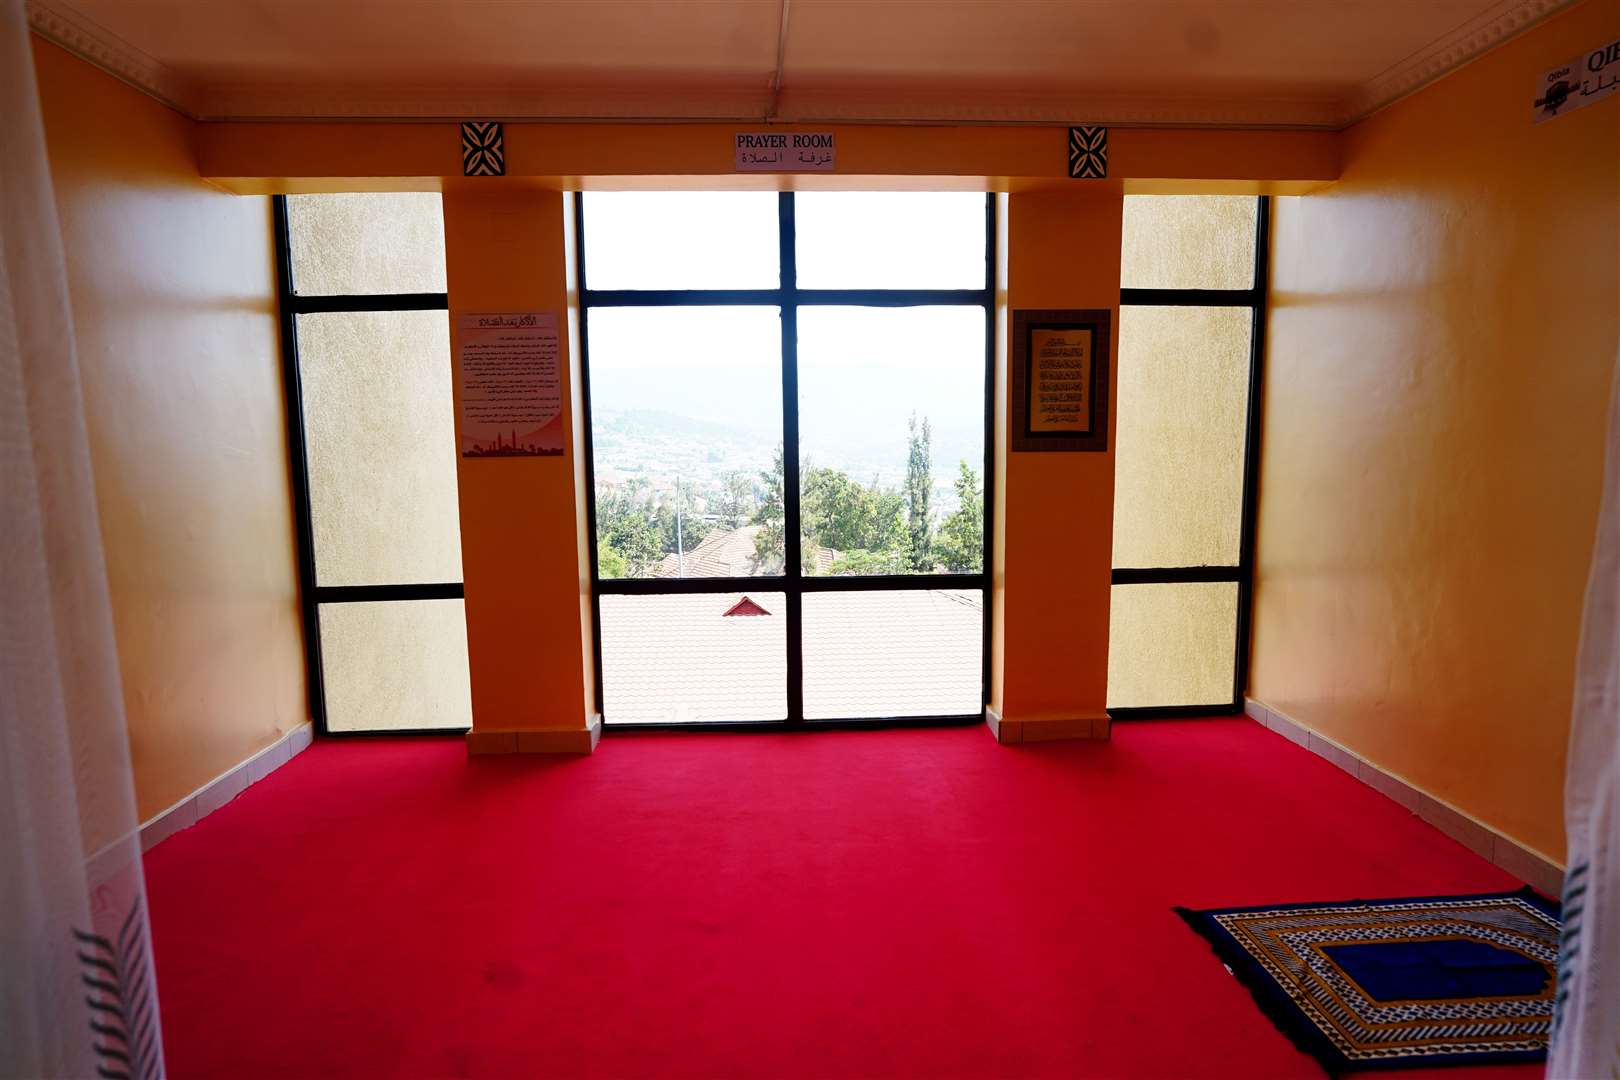 A prayer room at the Hope Hostel in Kigali, Rwanda (Victoria Jones/PA)